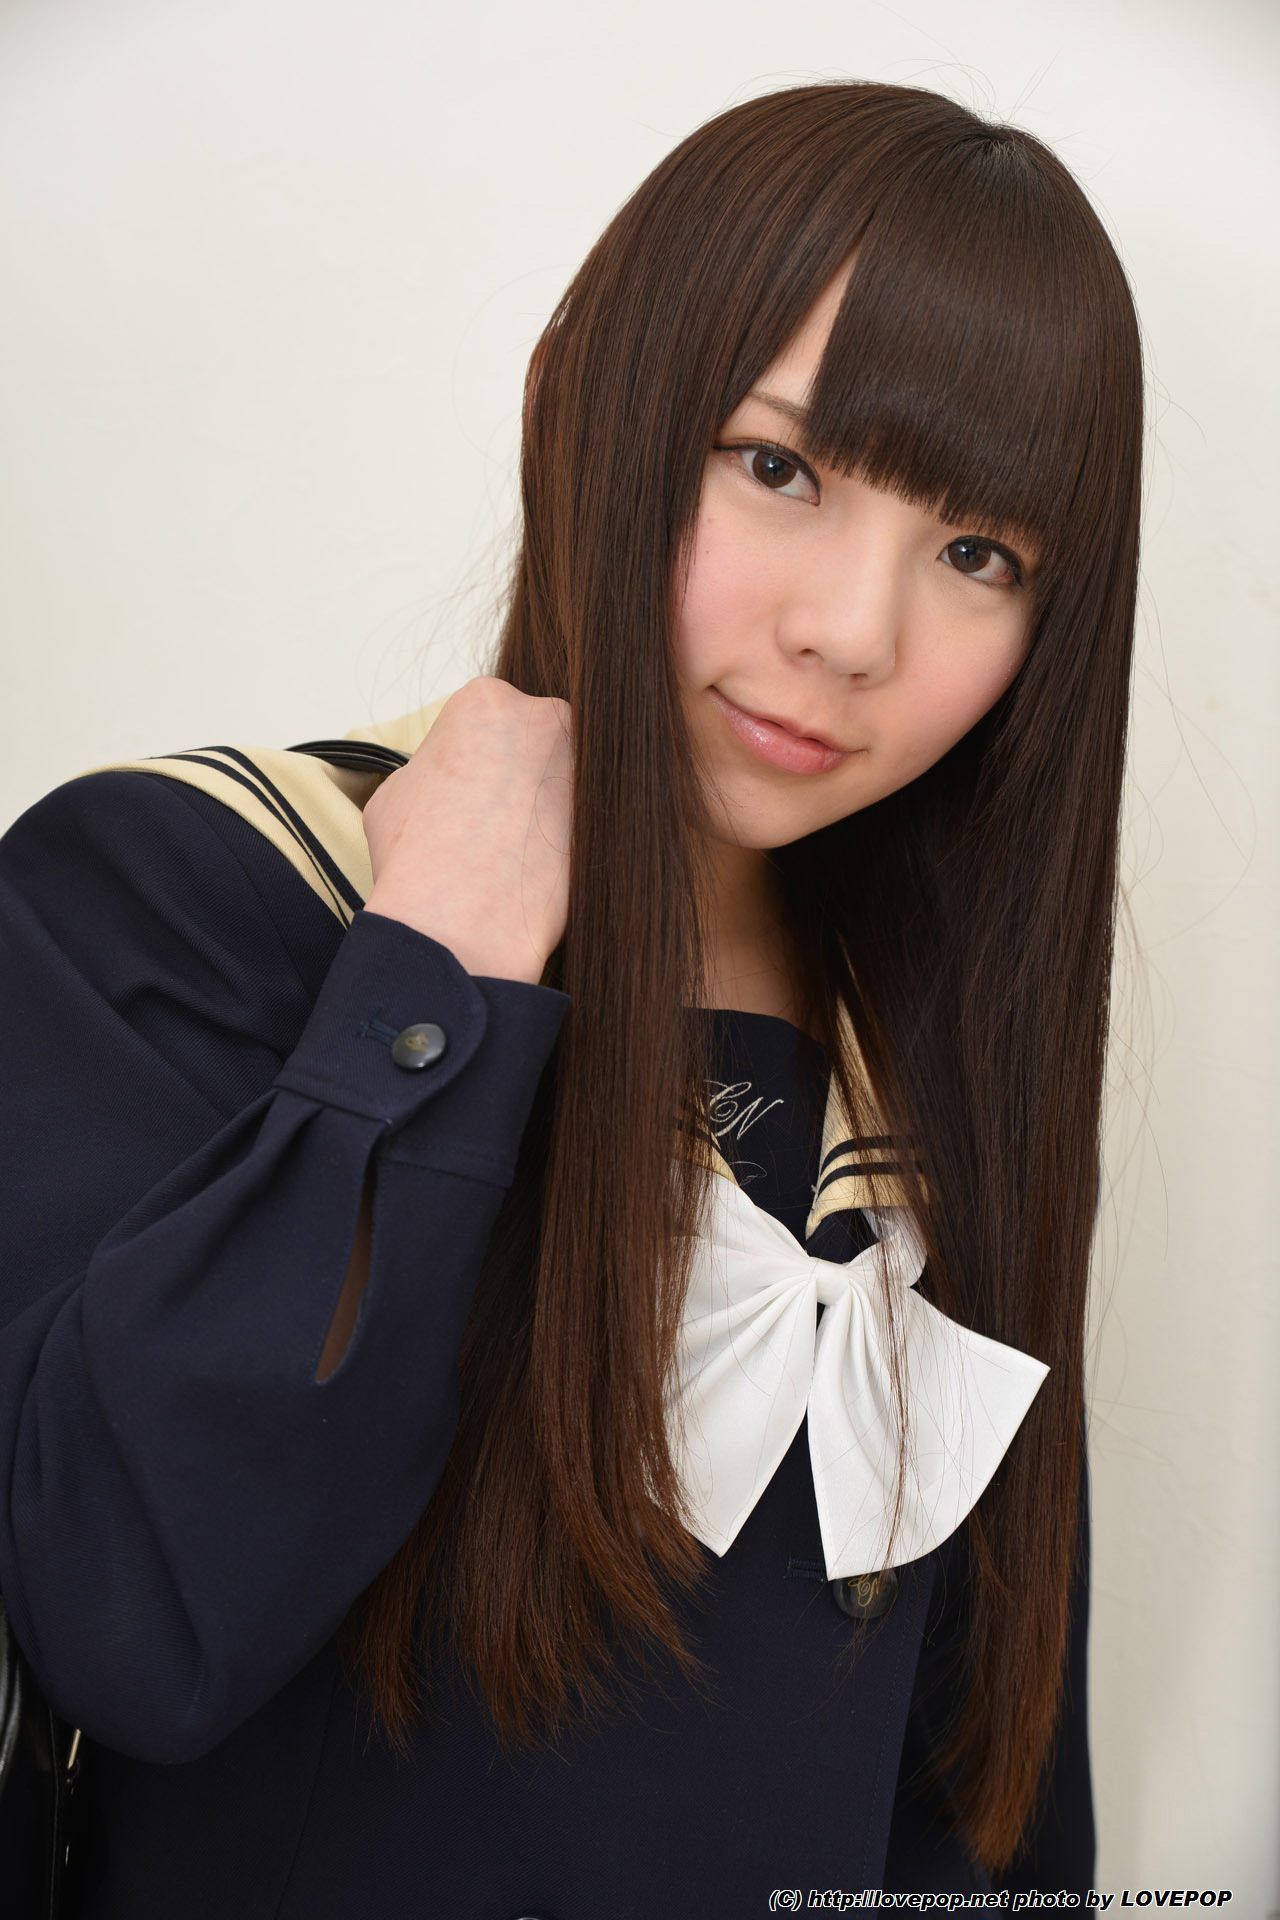 [LOVEPOP] Shiori Urano 浦野しおり Sailor suit - PPV